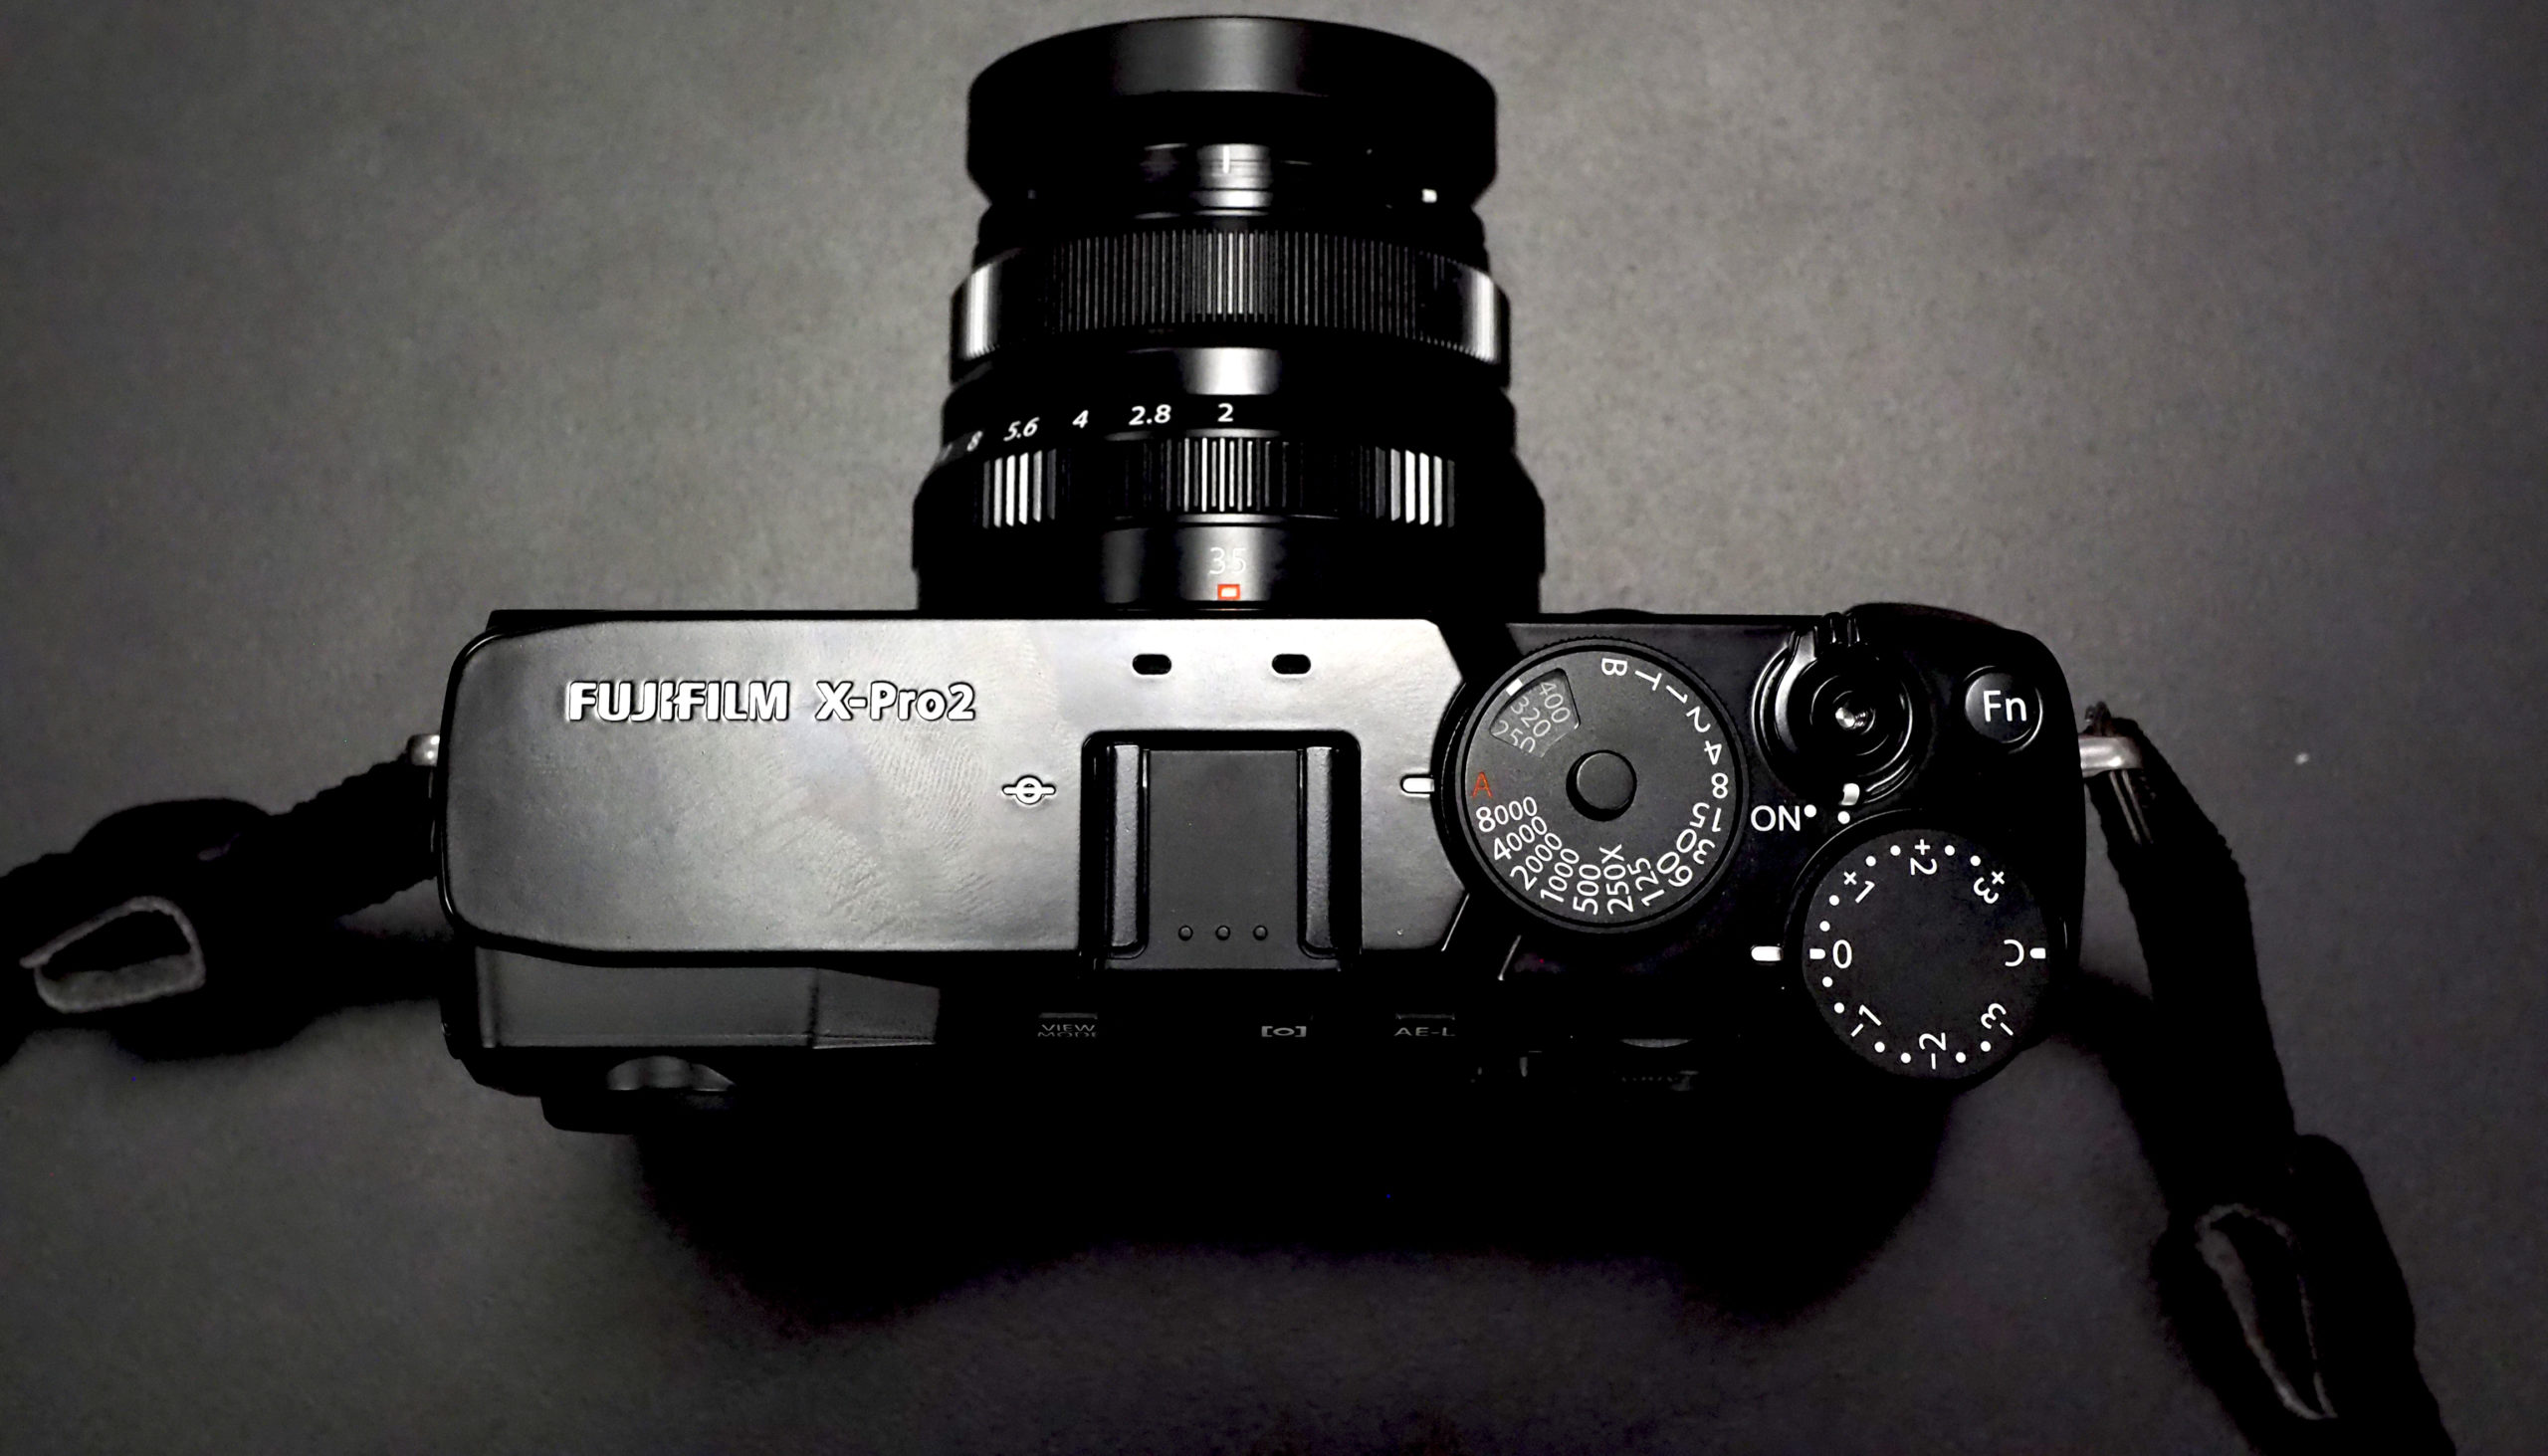 Fujifilm X-Pro2: Fuji’s Top Mirrorless Shooter Returns With Fury